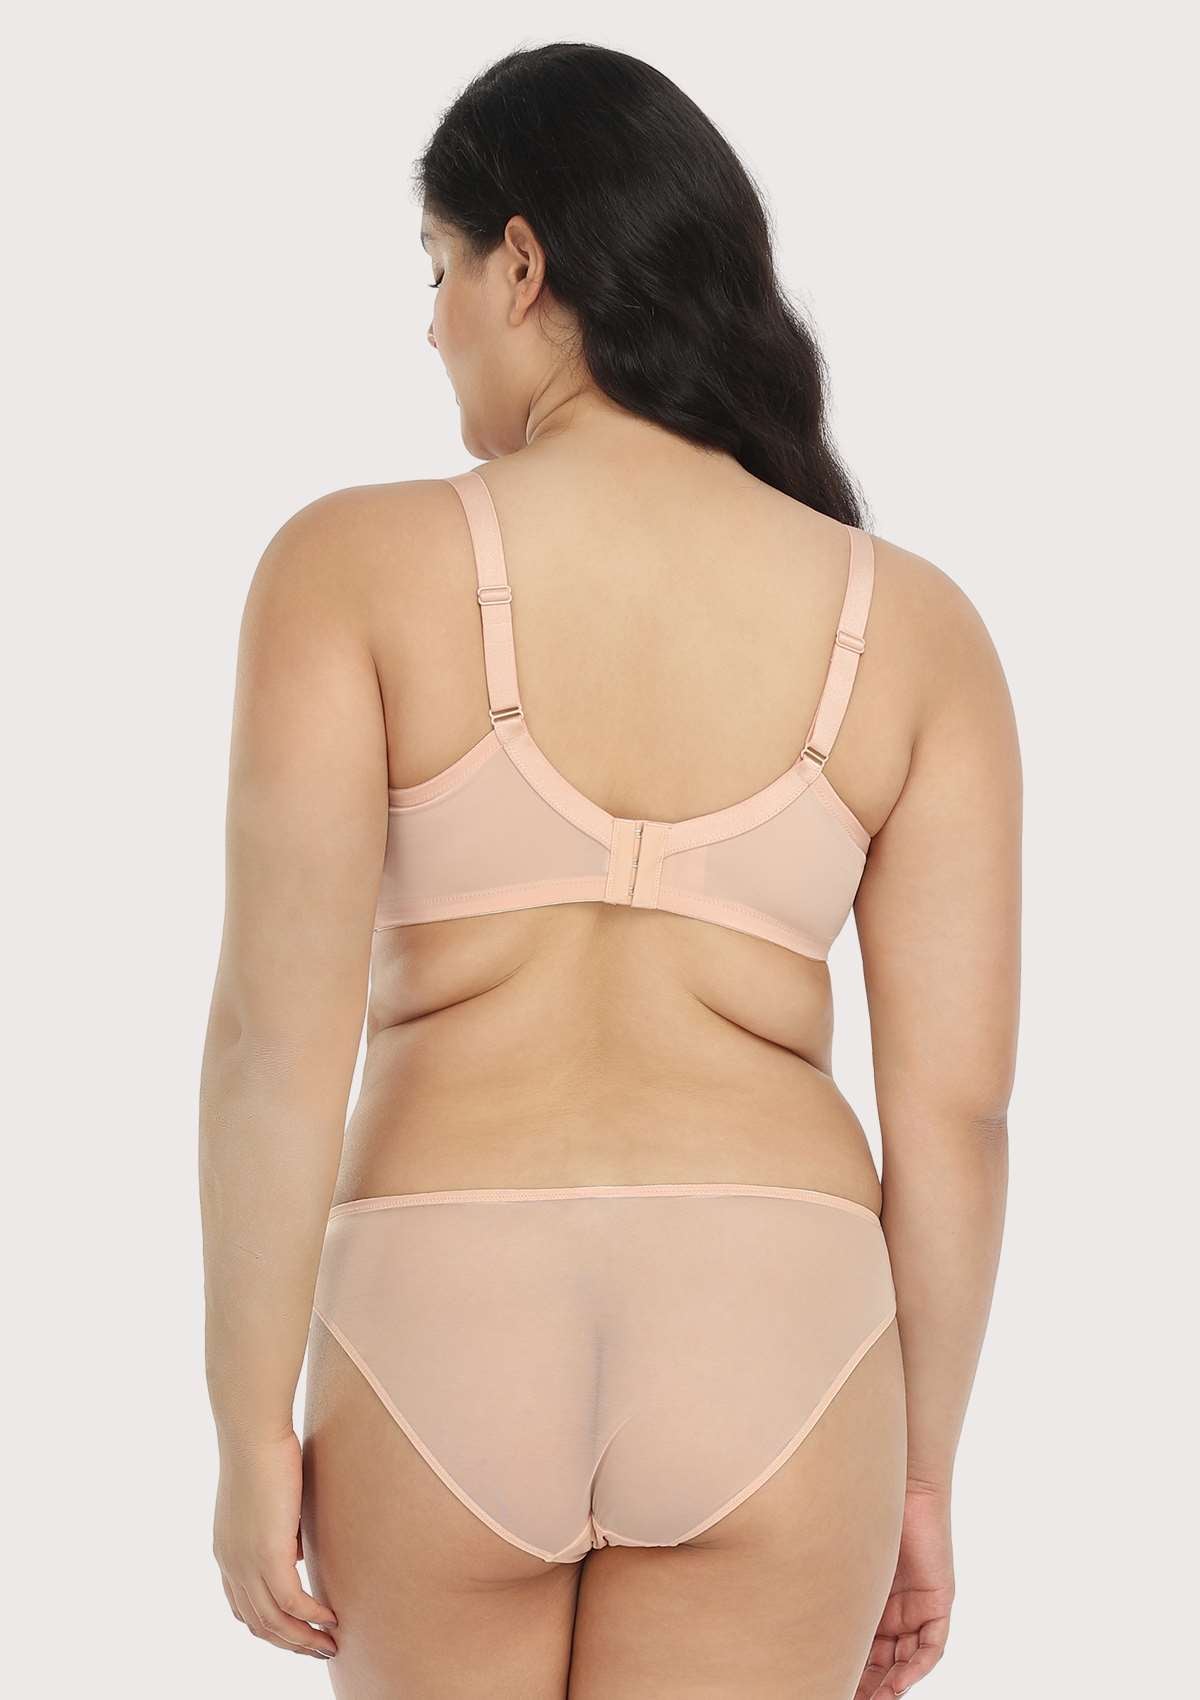 HSIA Sunflower Matching Bra And Panties Set: Comfortable Plus Size Bra - Pink / 40 / I